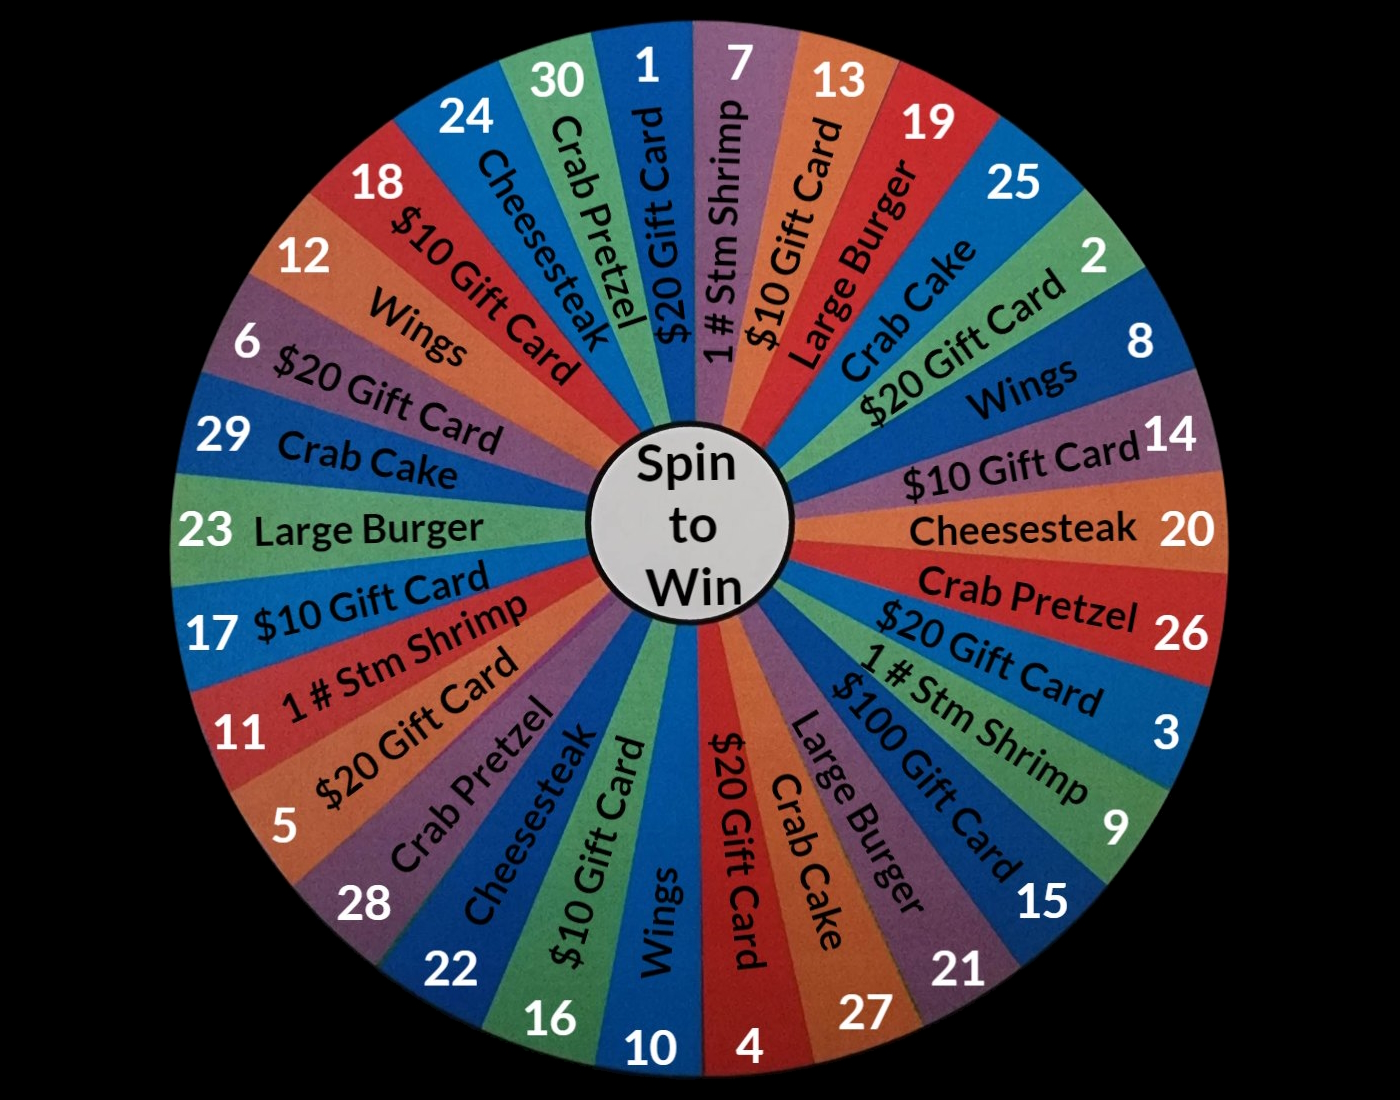 The music bingo prize wheel